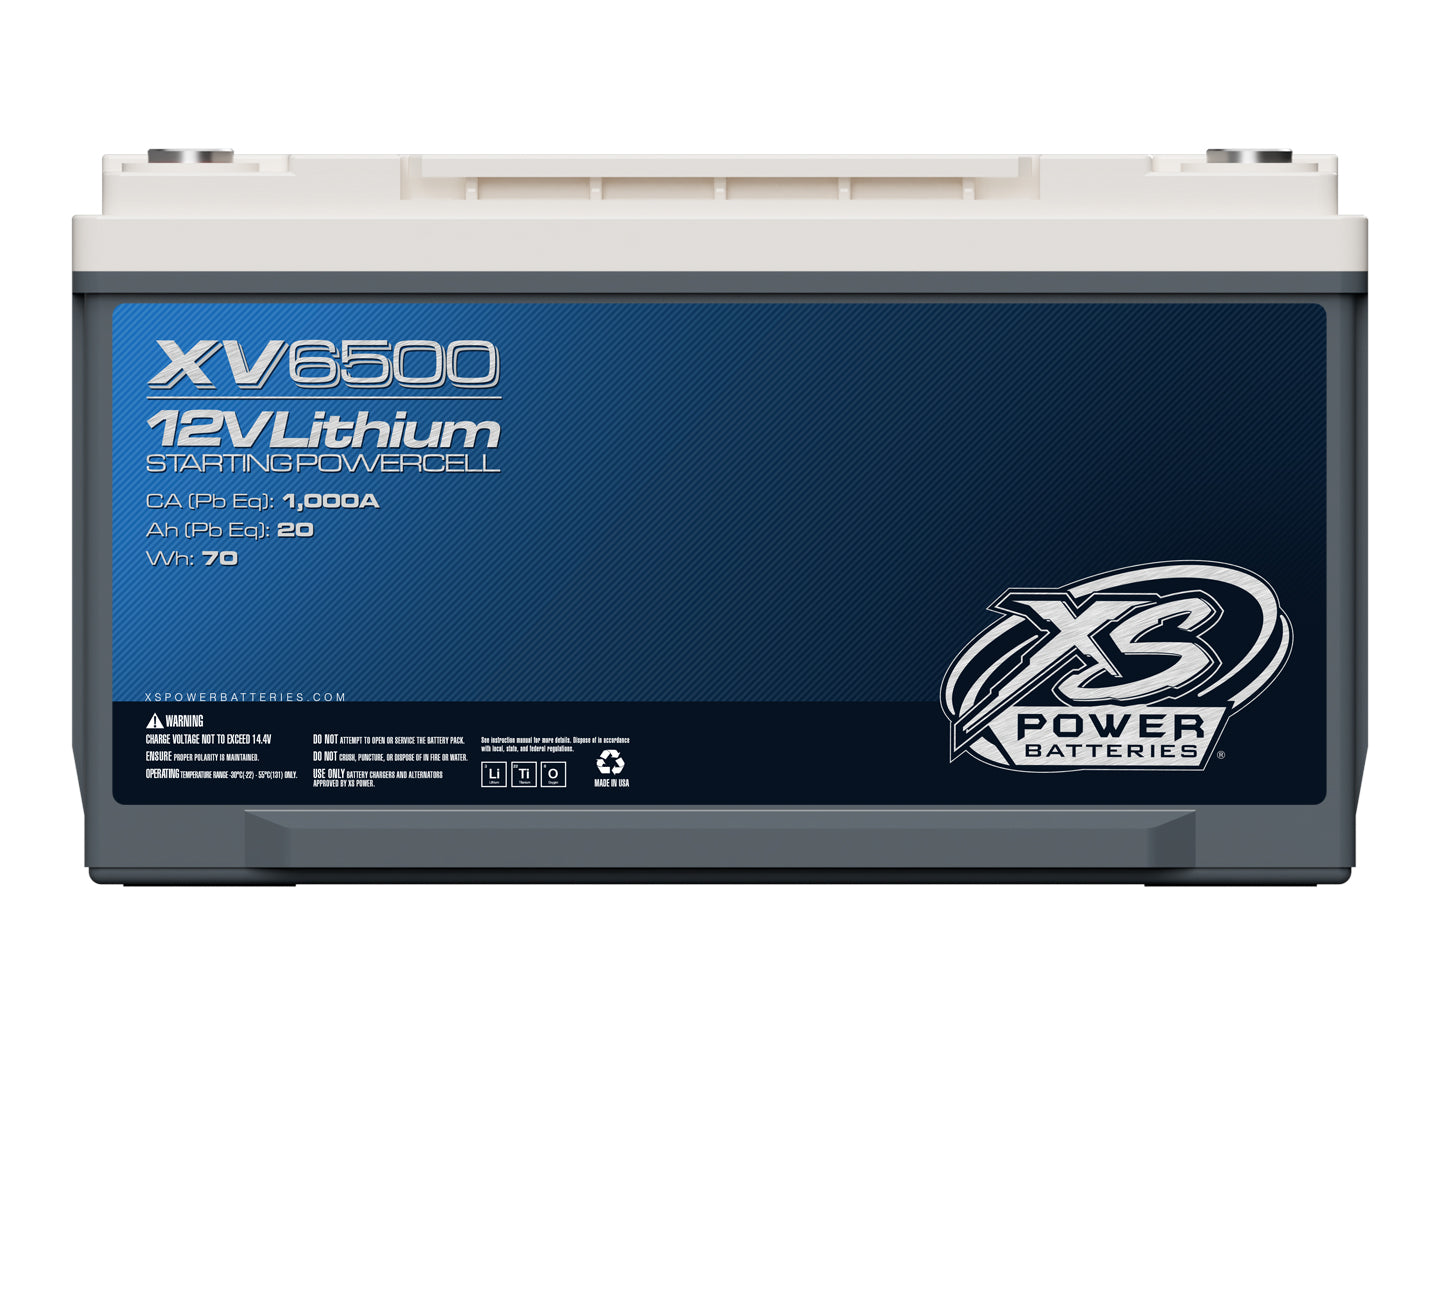 XV6500 XS Power 12VDC Group 65 Lithium LTO Underhood-Safe Vehicle Battery 1500W 70Wh